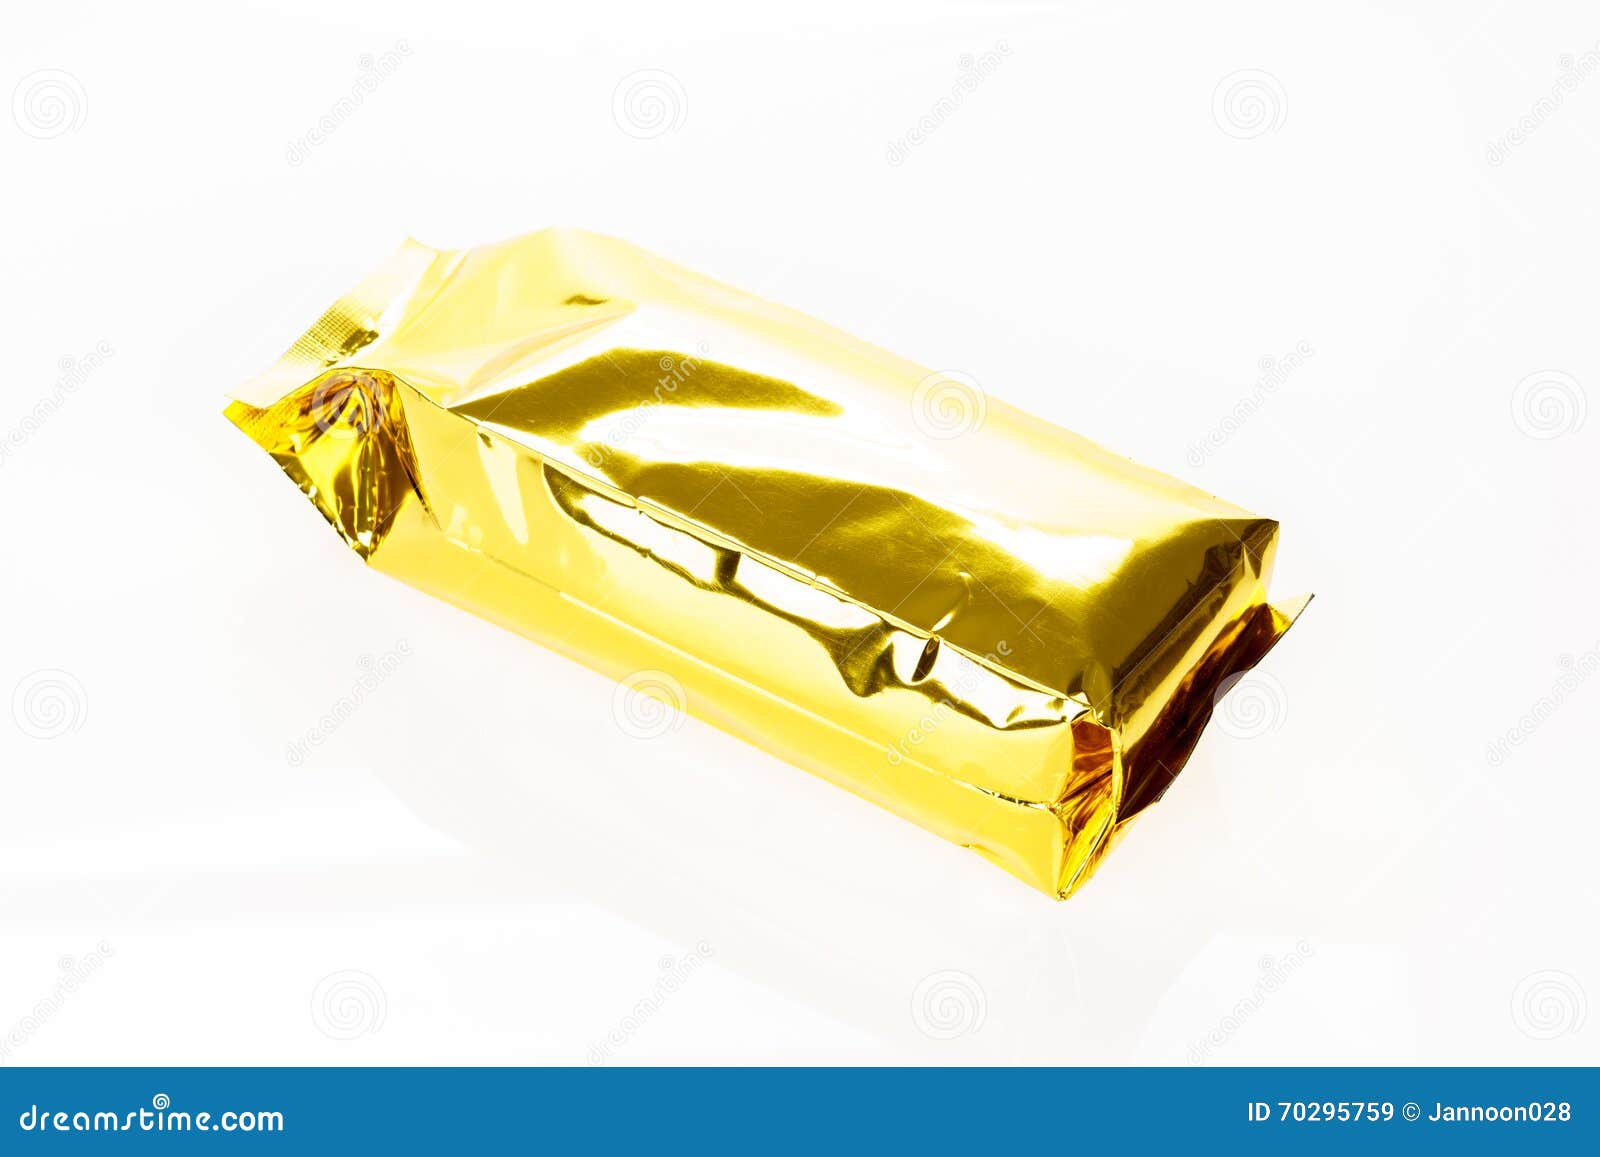 Golden Foil Bag Package on White Background. Stock Image - Image of ...